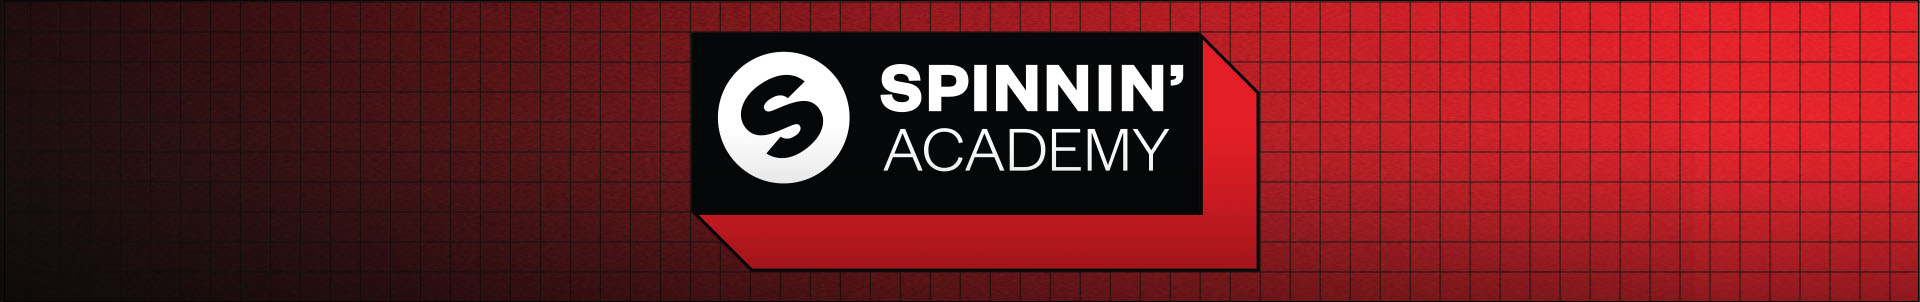 Spinnin' Academy announces its Dancefair program